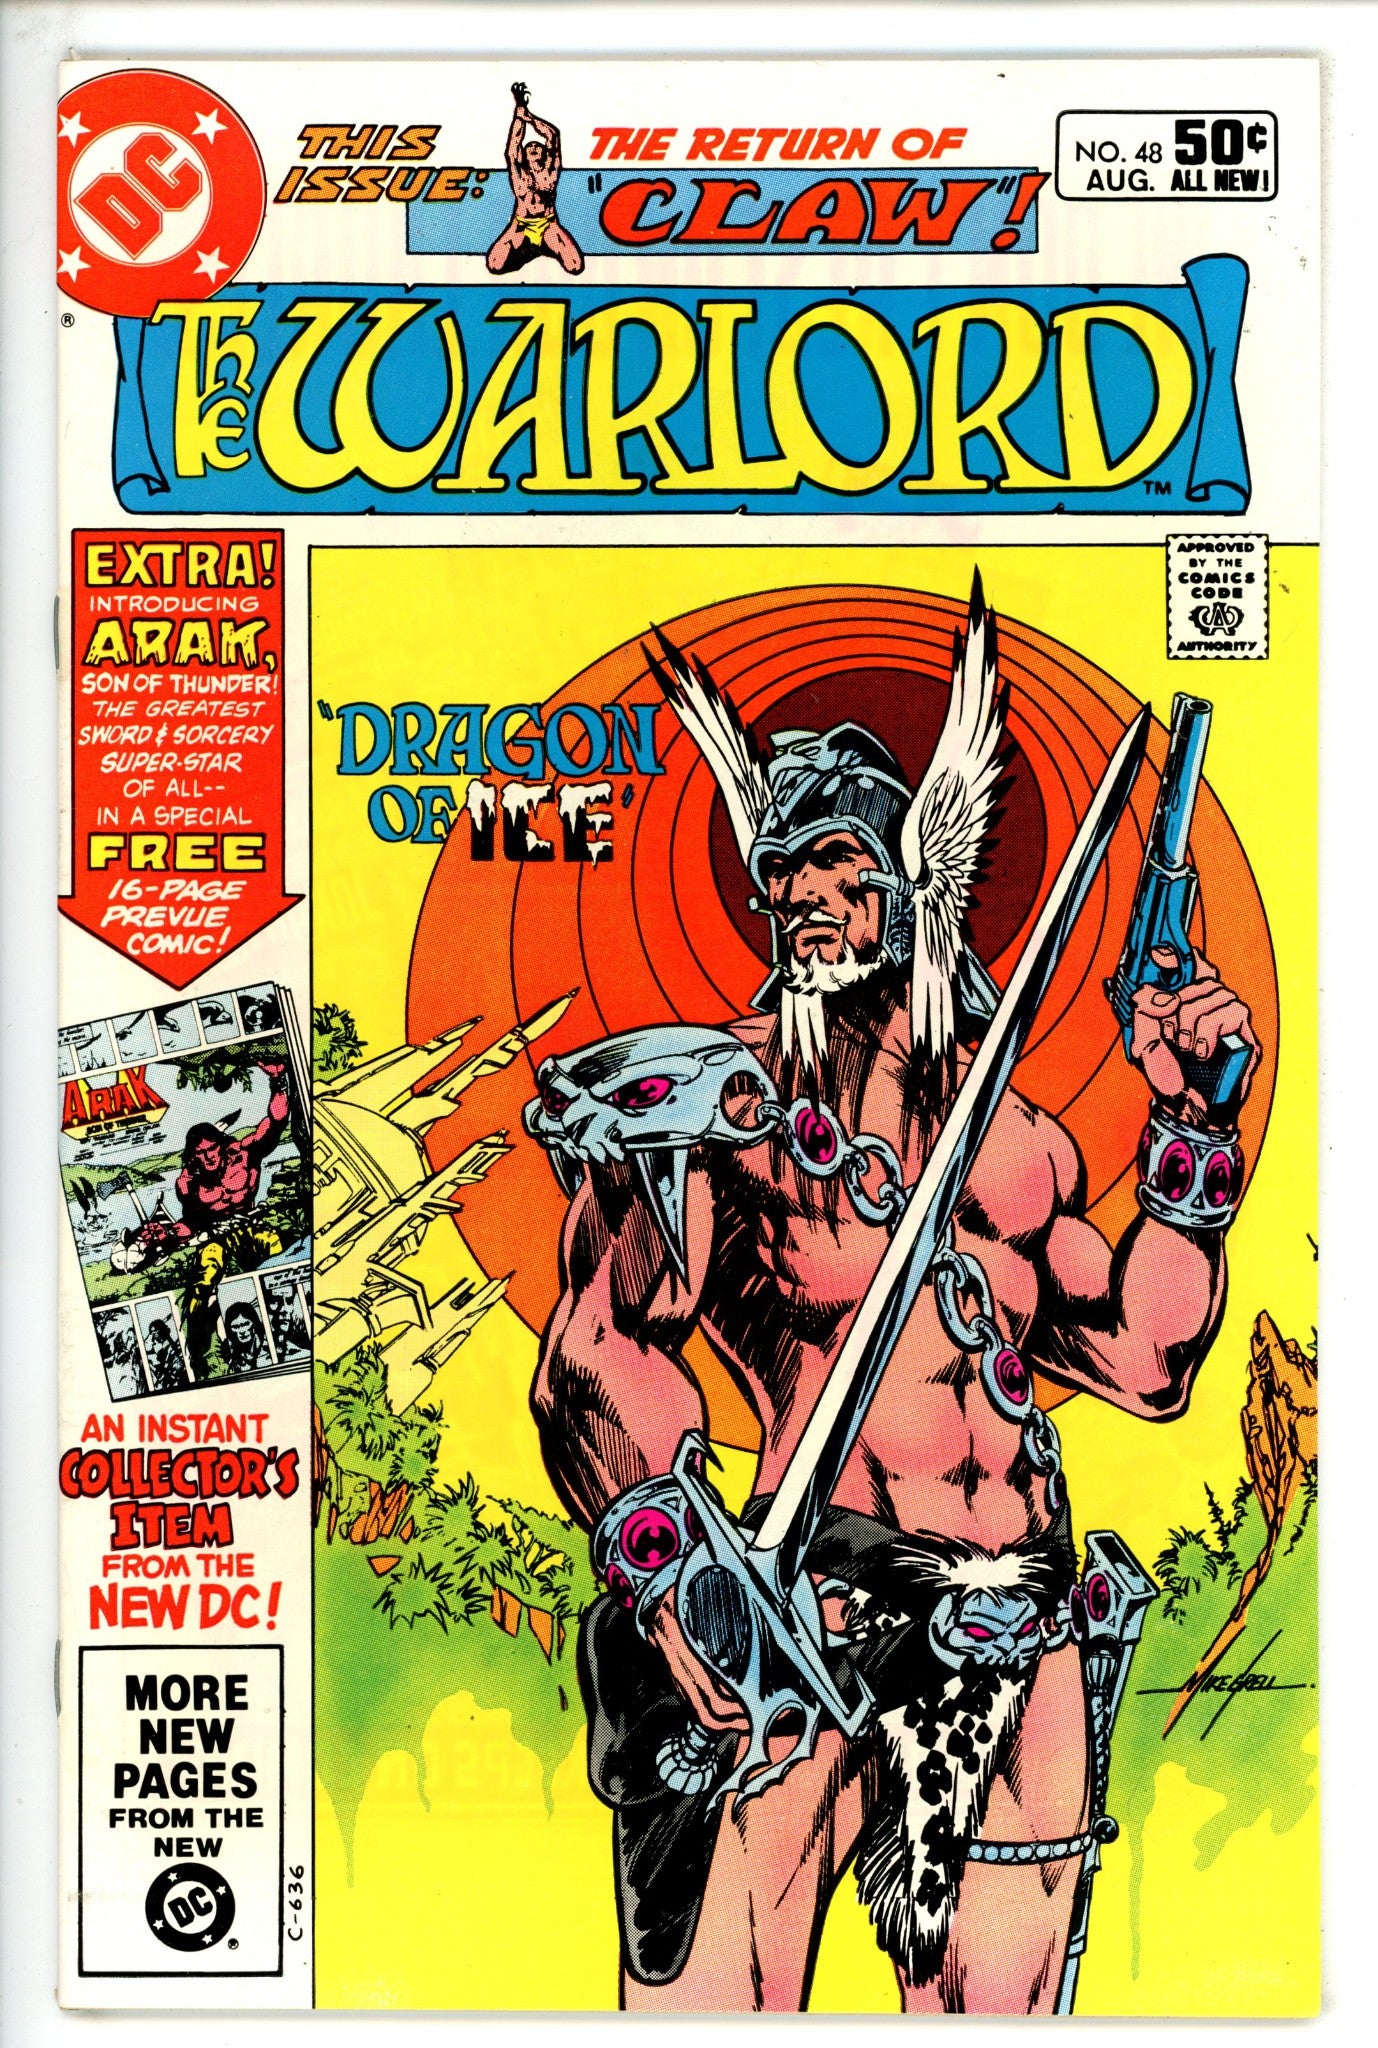 Warlord Vol 1 48 (1981)